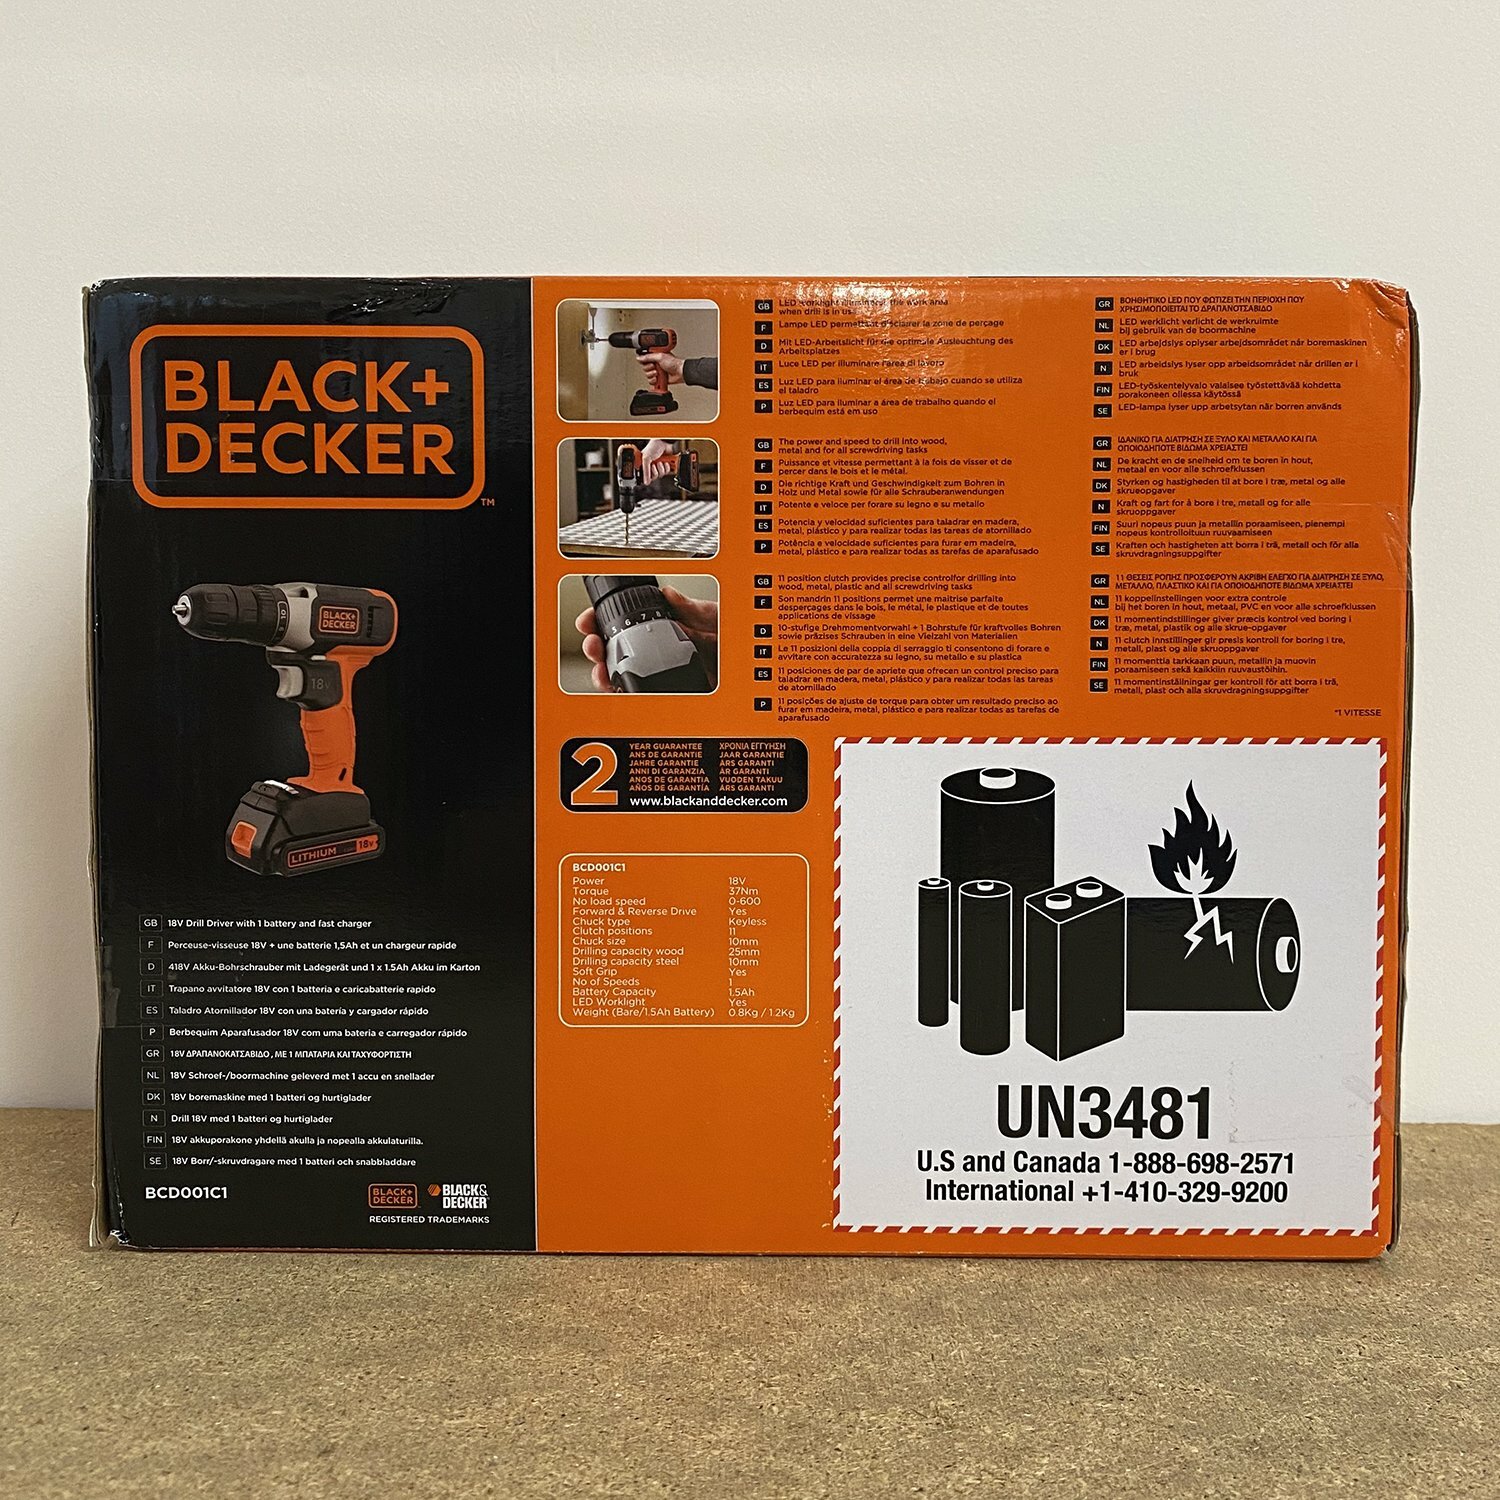 Black and Decker BCD001C 18v Cordless Drill Driver